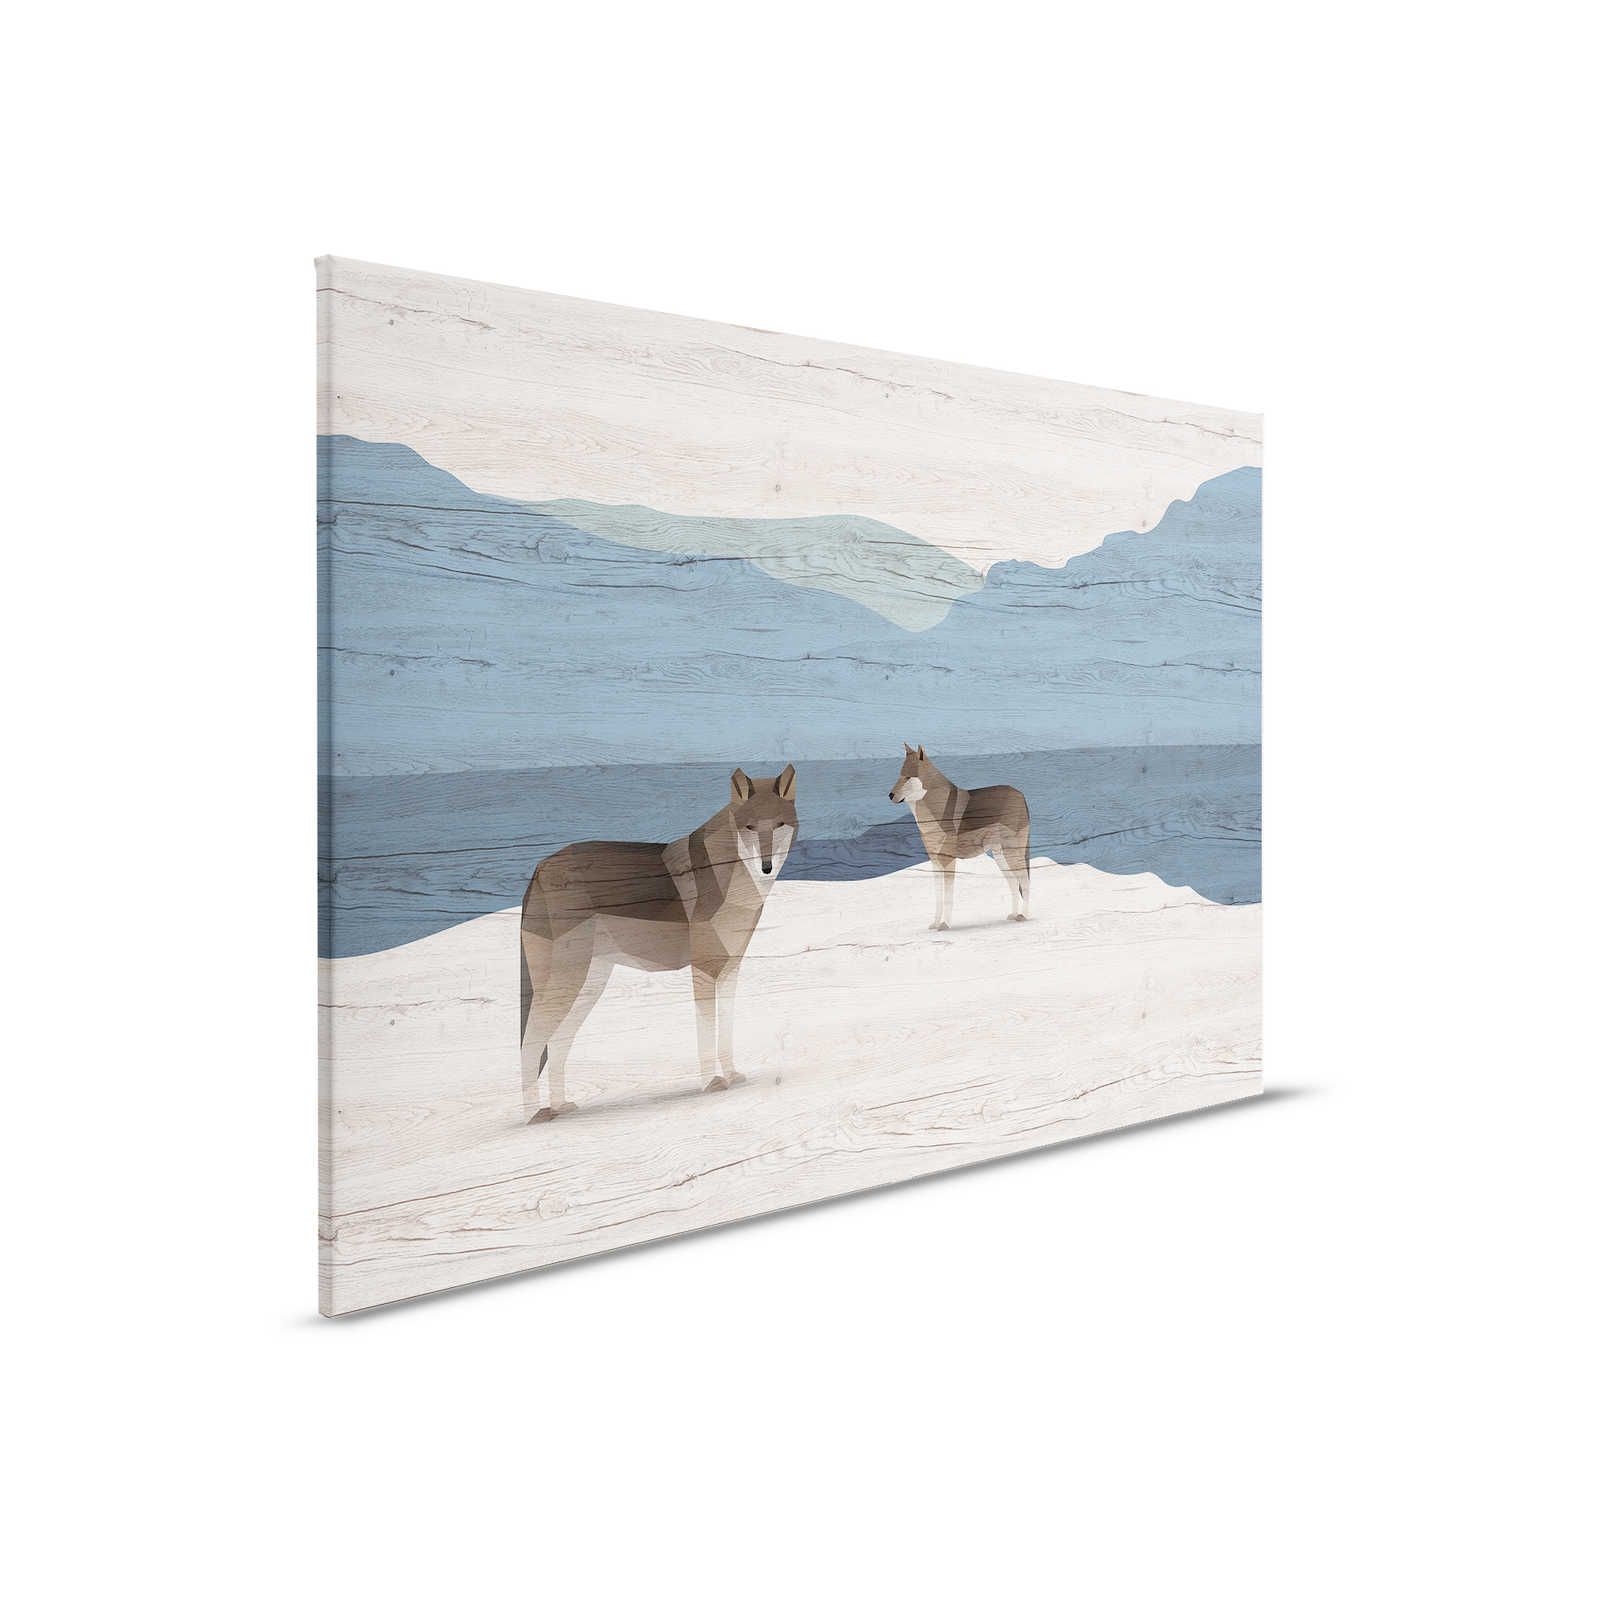         Yukon 1 - Leinwandbild Berge & Hunde mit Holzstruktur – 0,90 m x 0,60 m
    